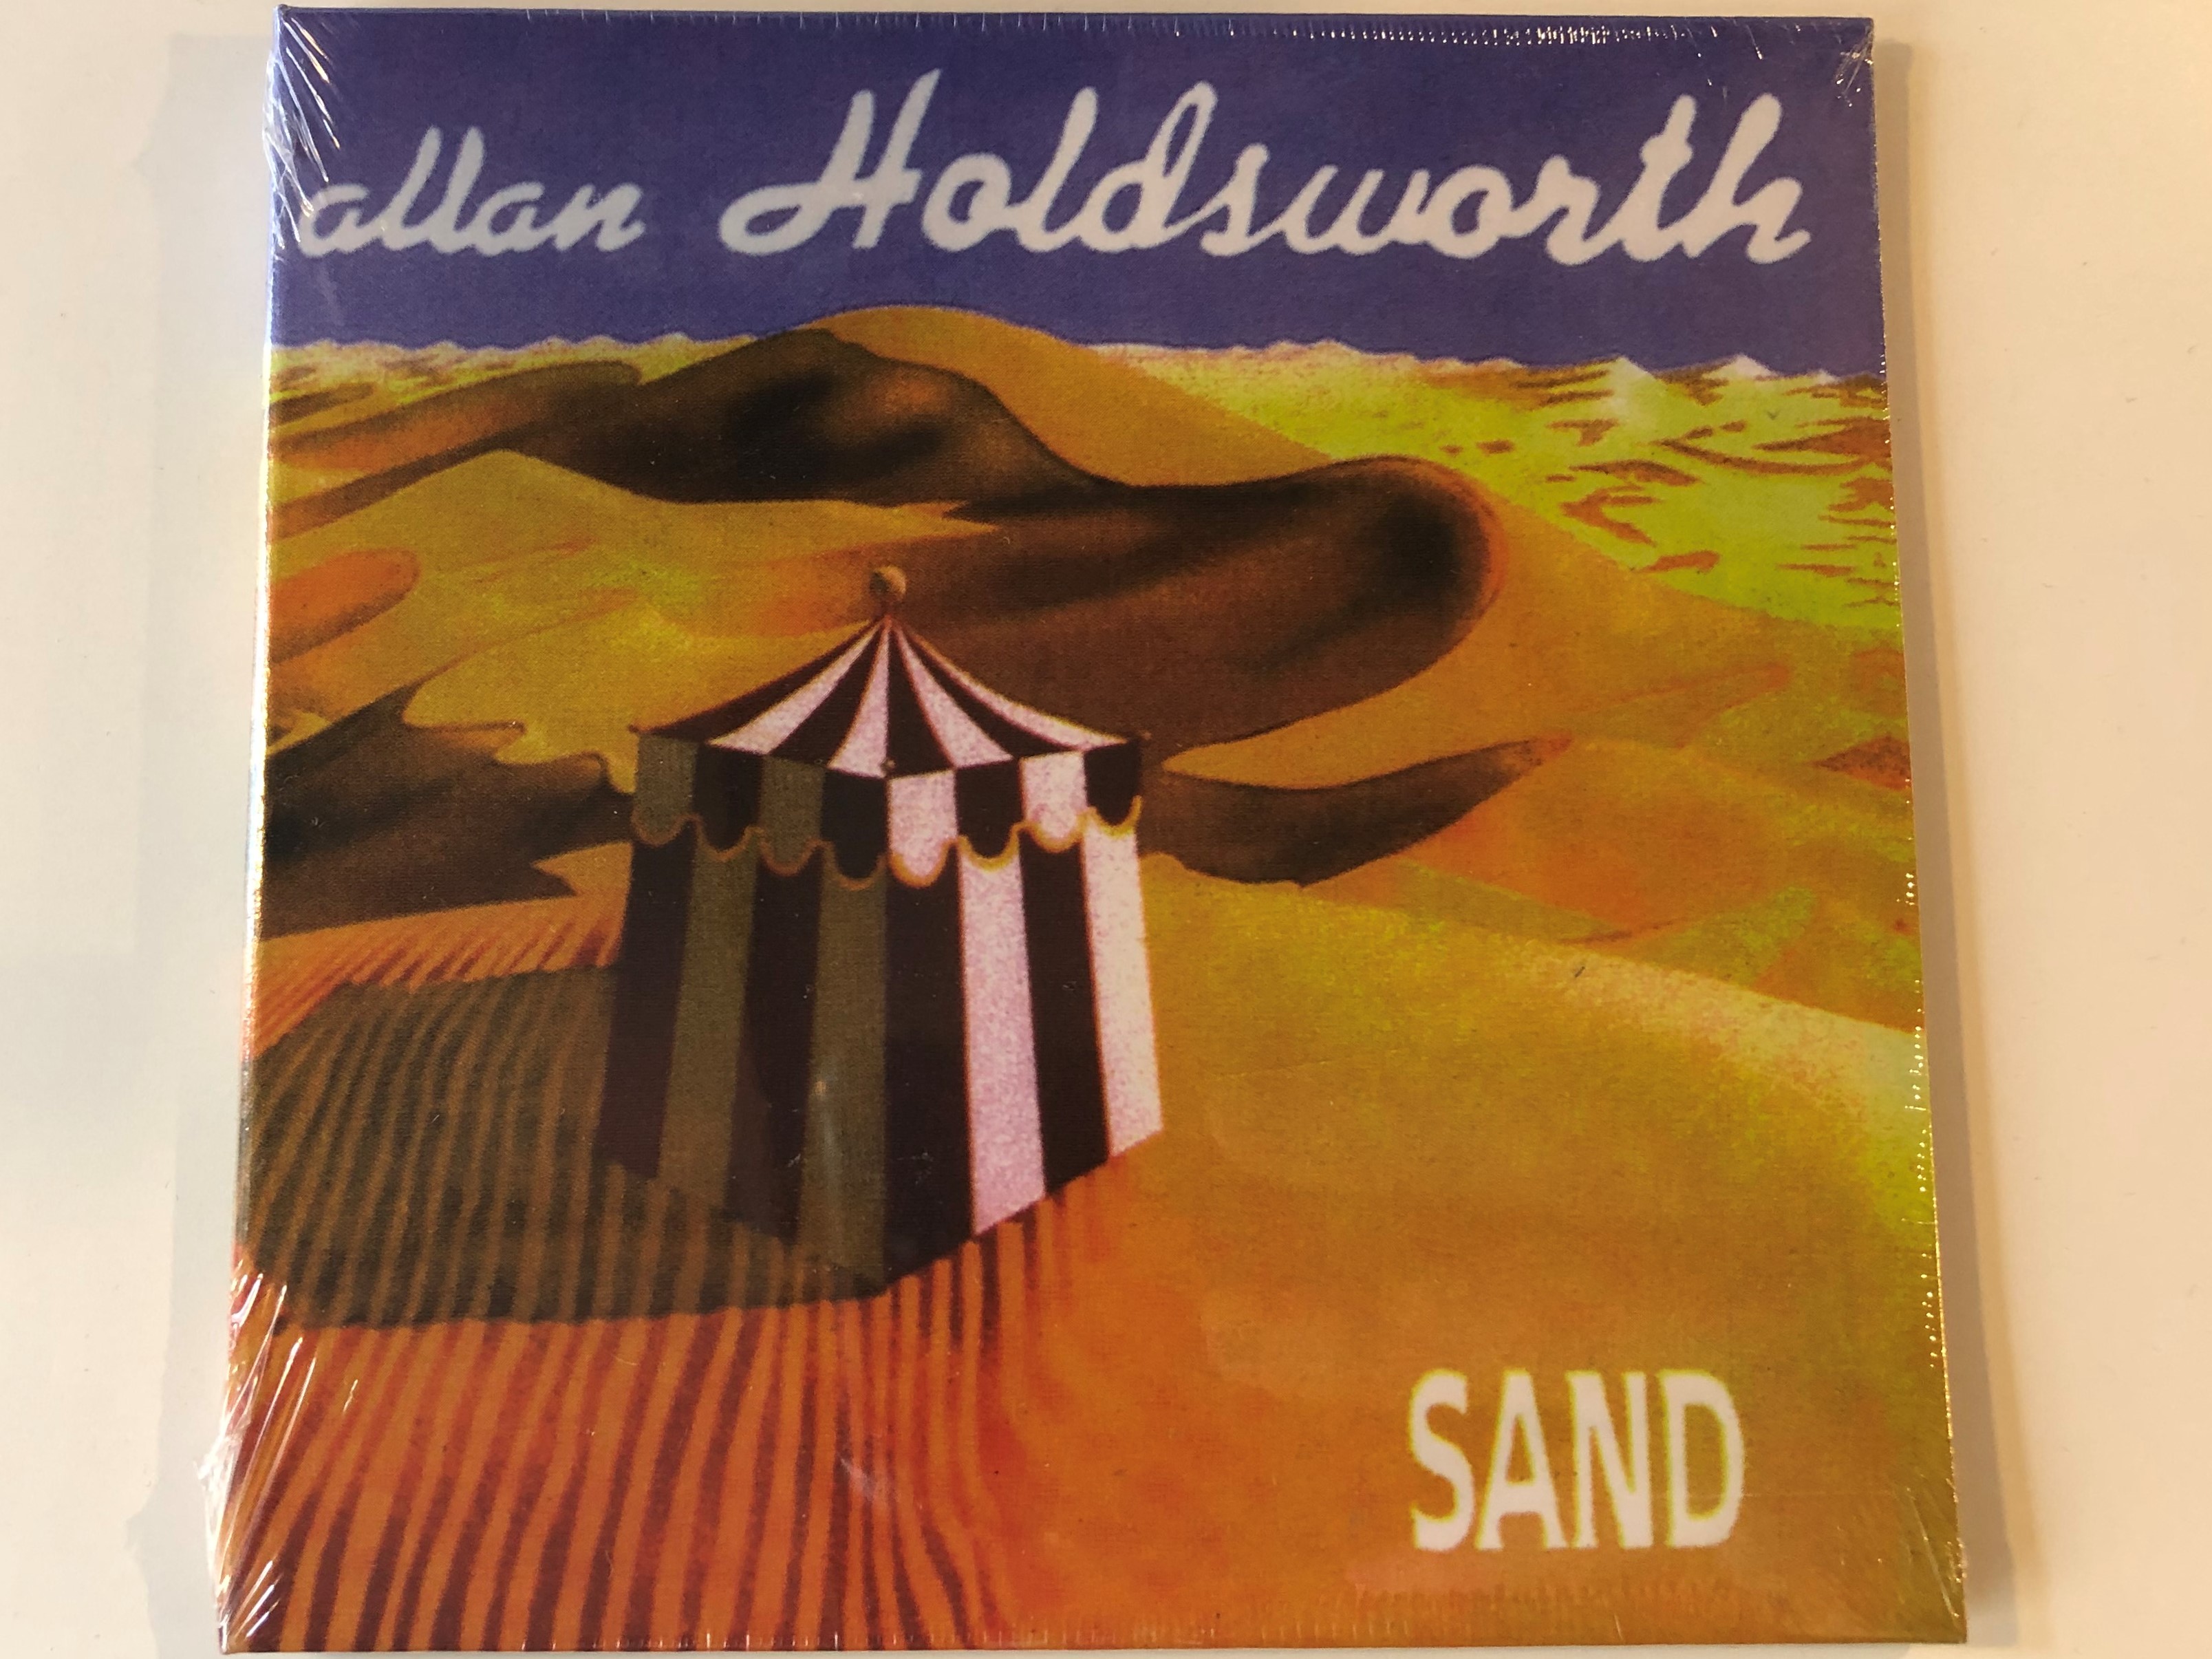 allan-holdsworth-sand-manifesto-audio-cd-1987-767004650722-1-.jpg